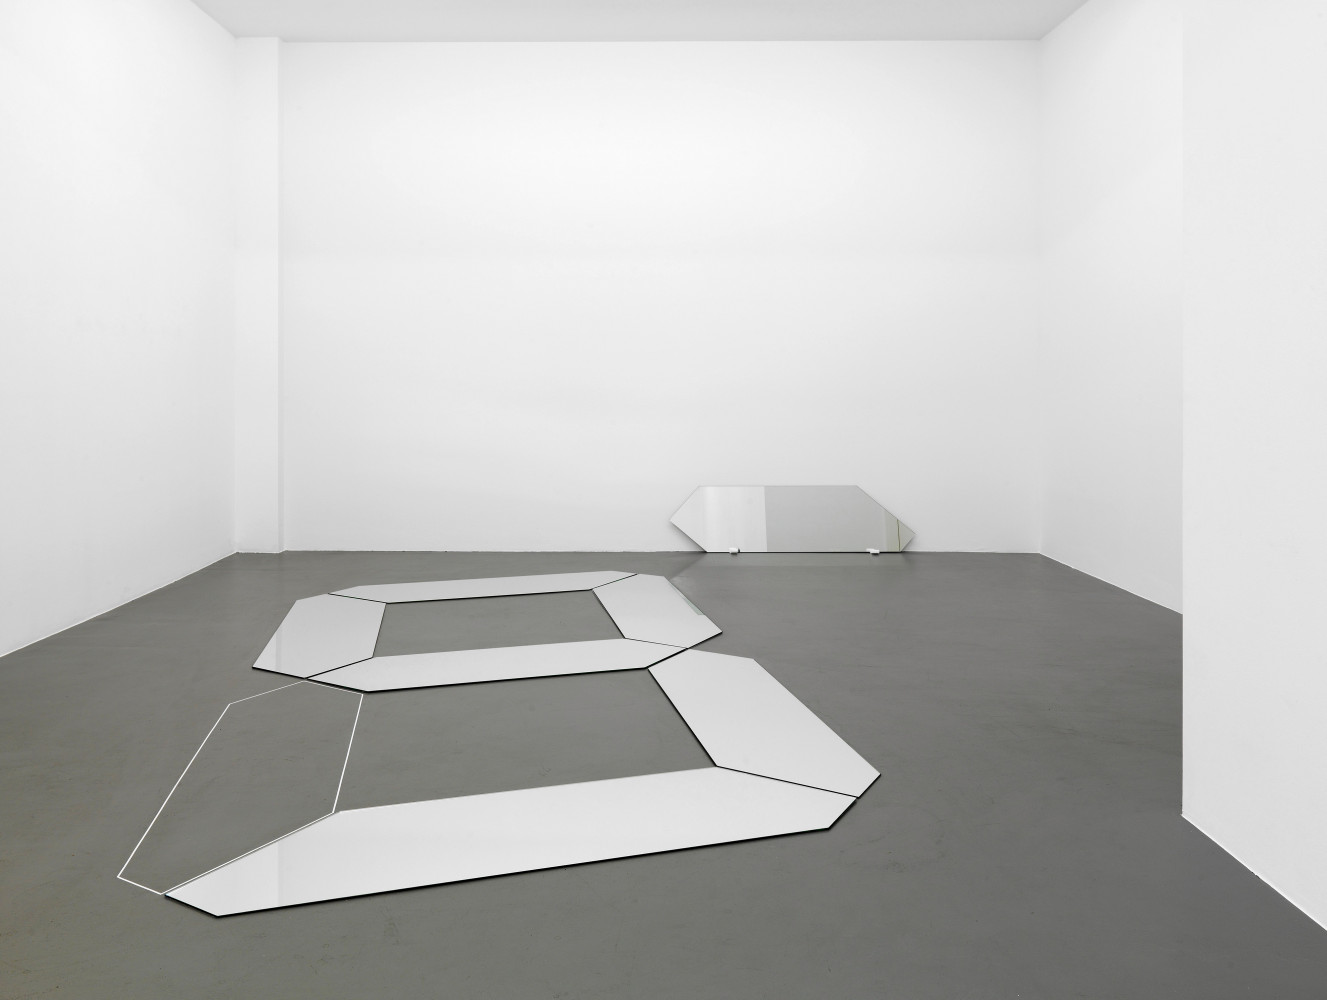 Tatsuo Miyajima, ‘Counter Sculpture’, 2000, Mirror, tape